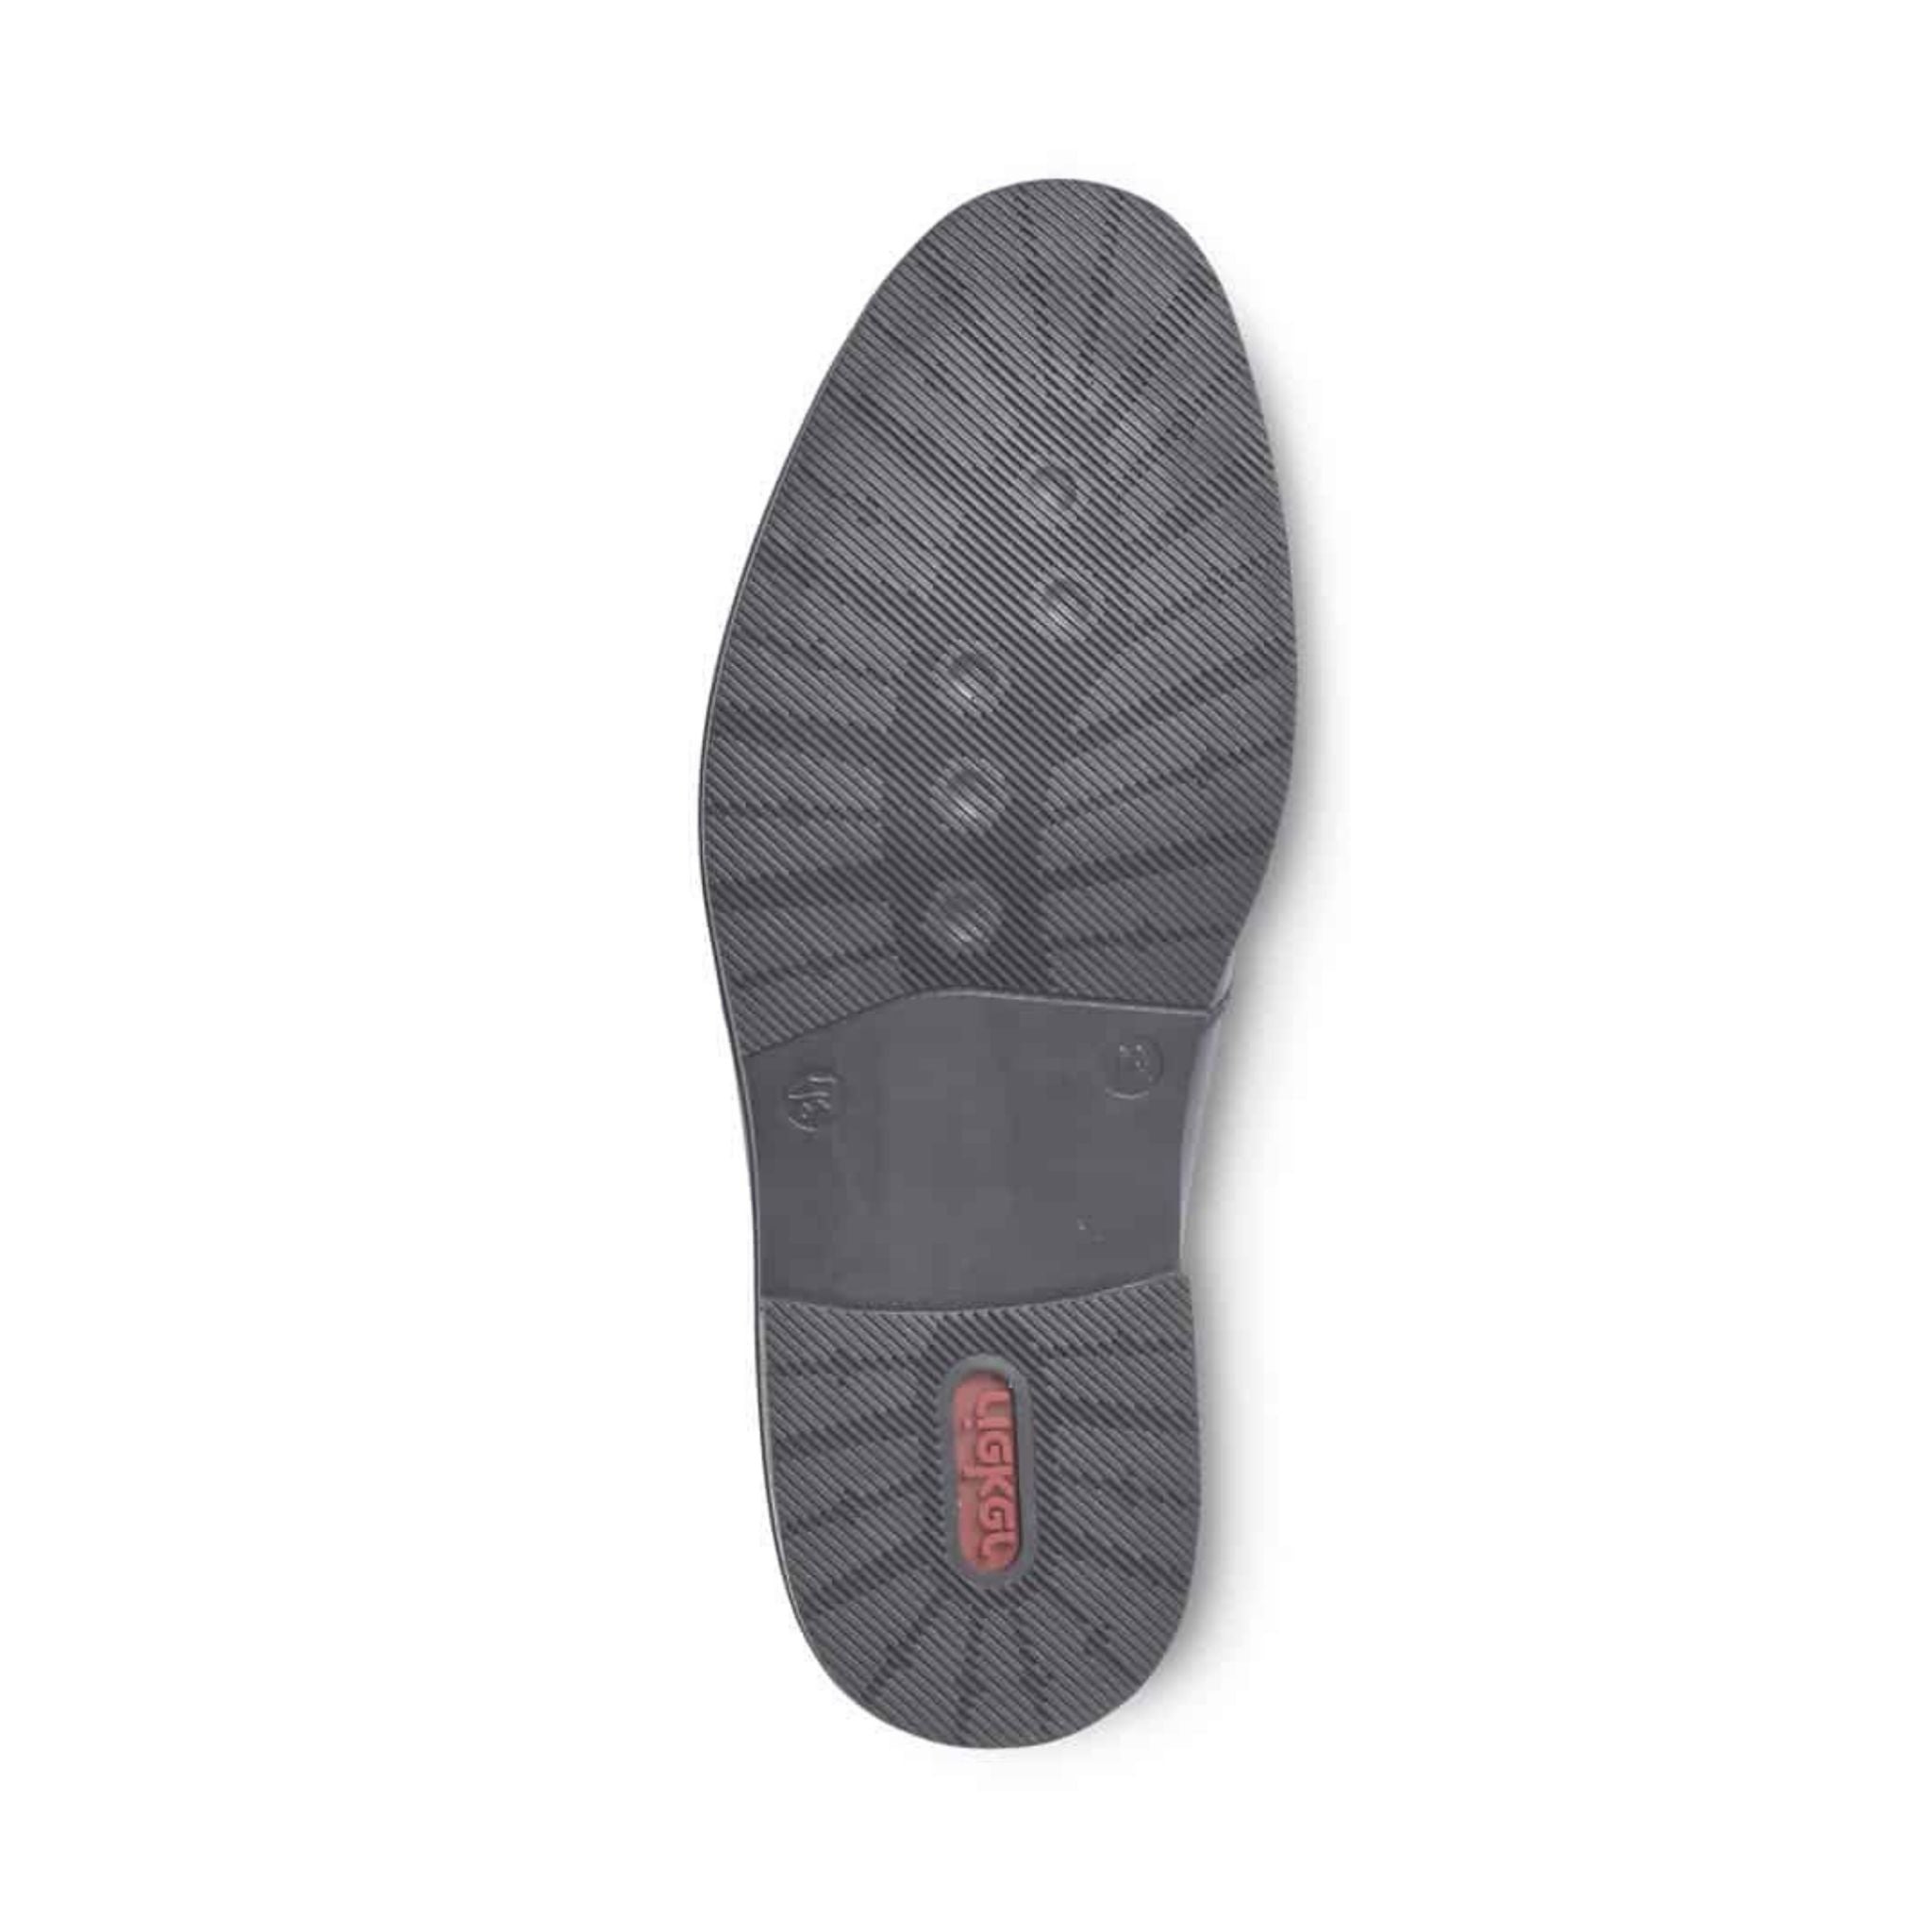 Black outsole with slight heel on dress shoe